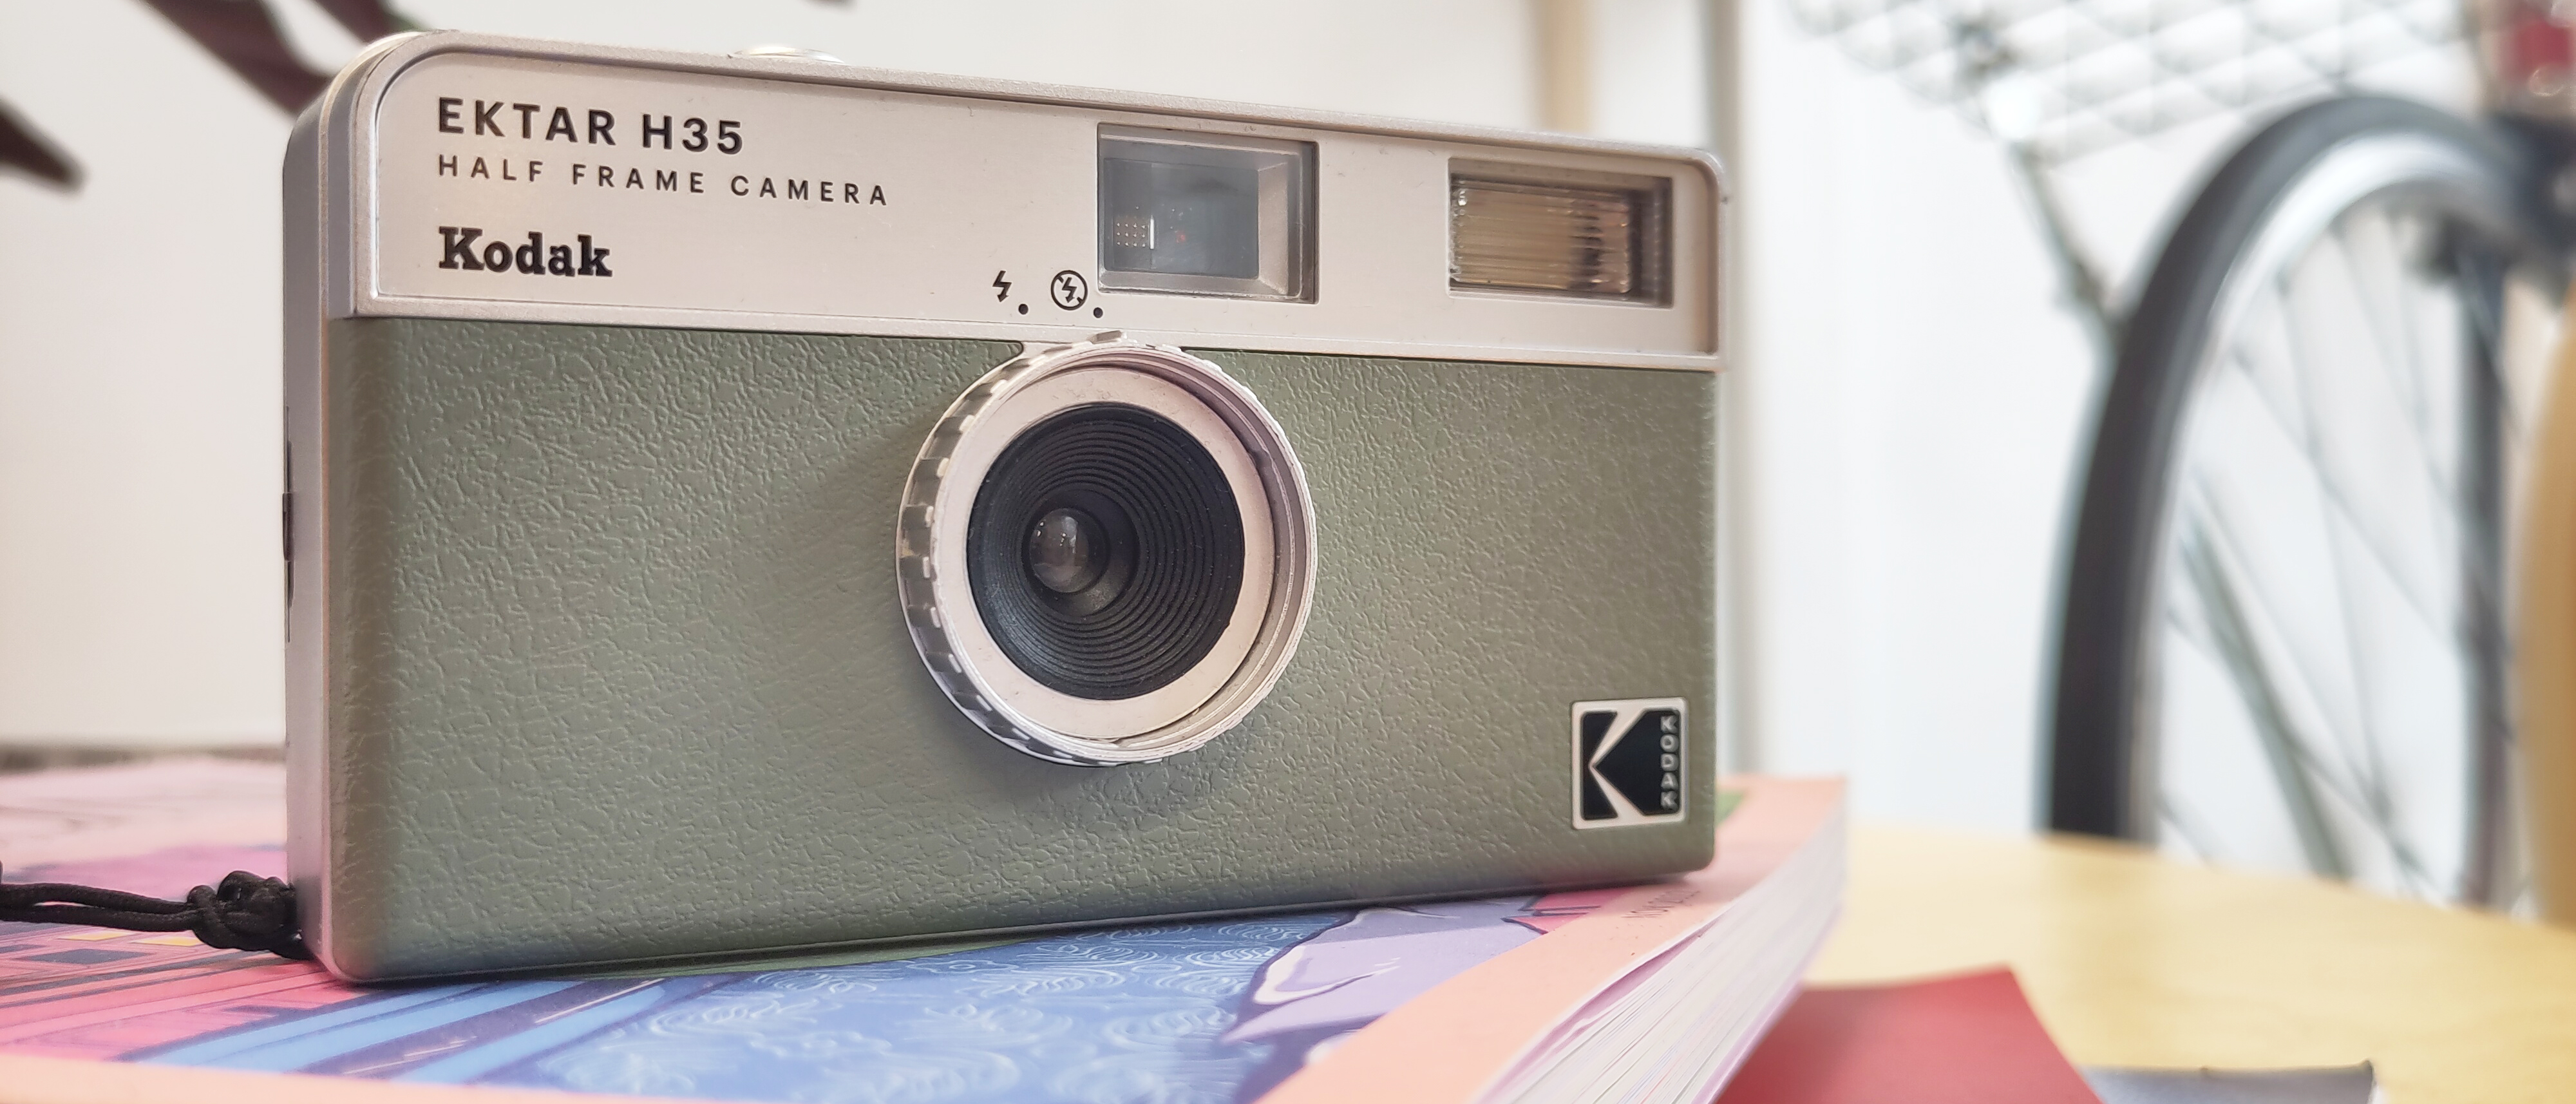 Hello everybody! I got a Kodak Ektar H35 and just developed my